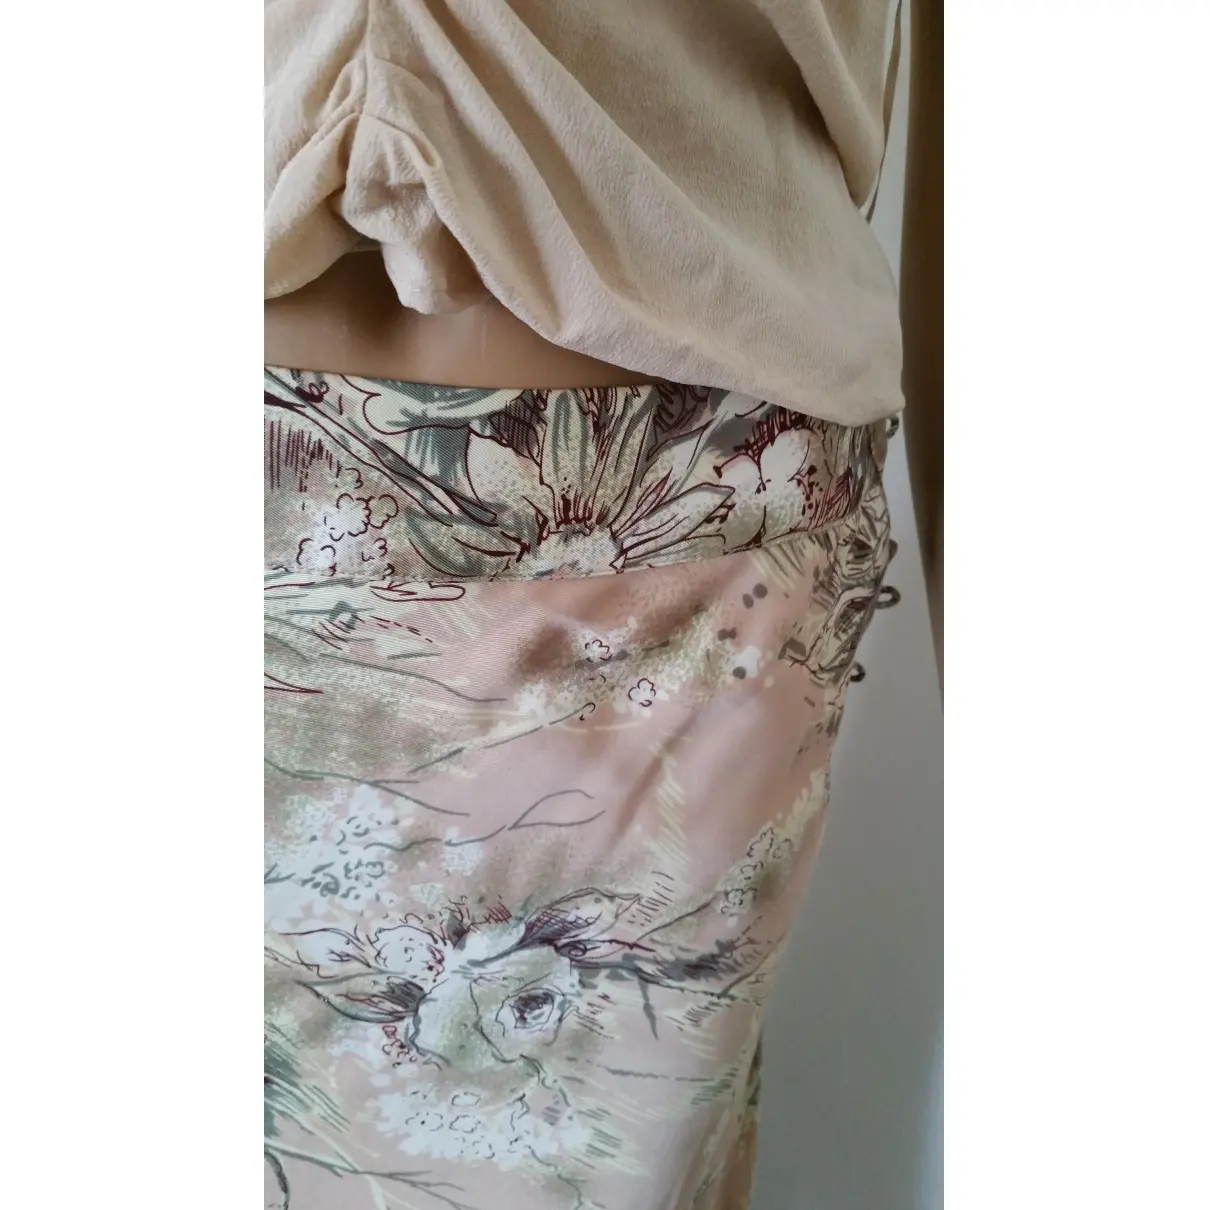 Silk mid-length skirt Stella Forest